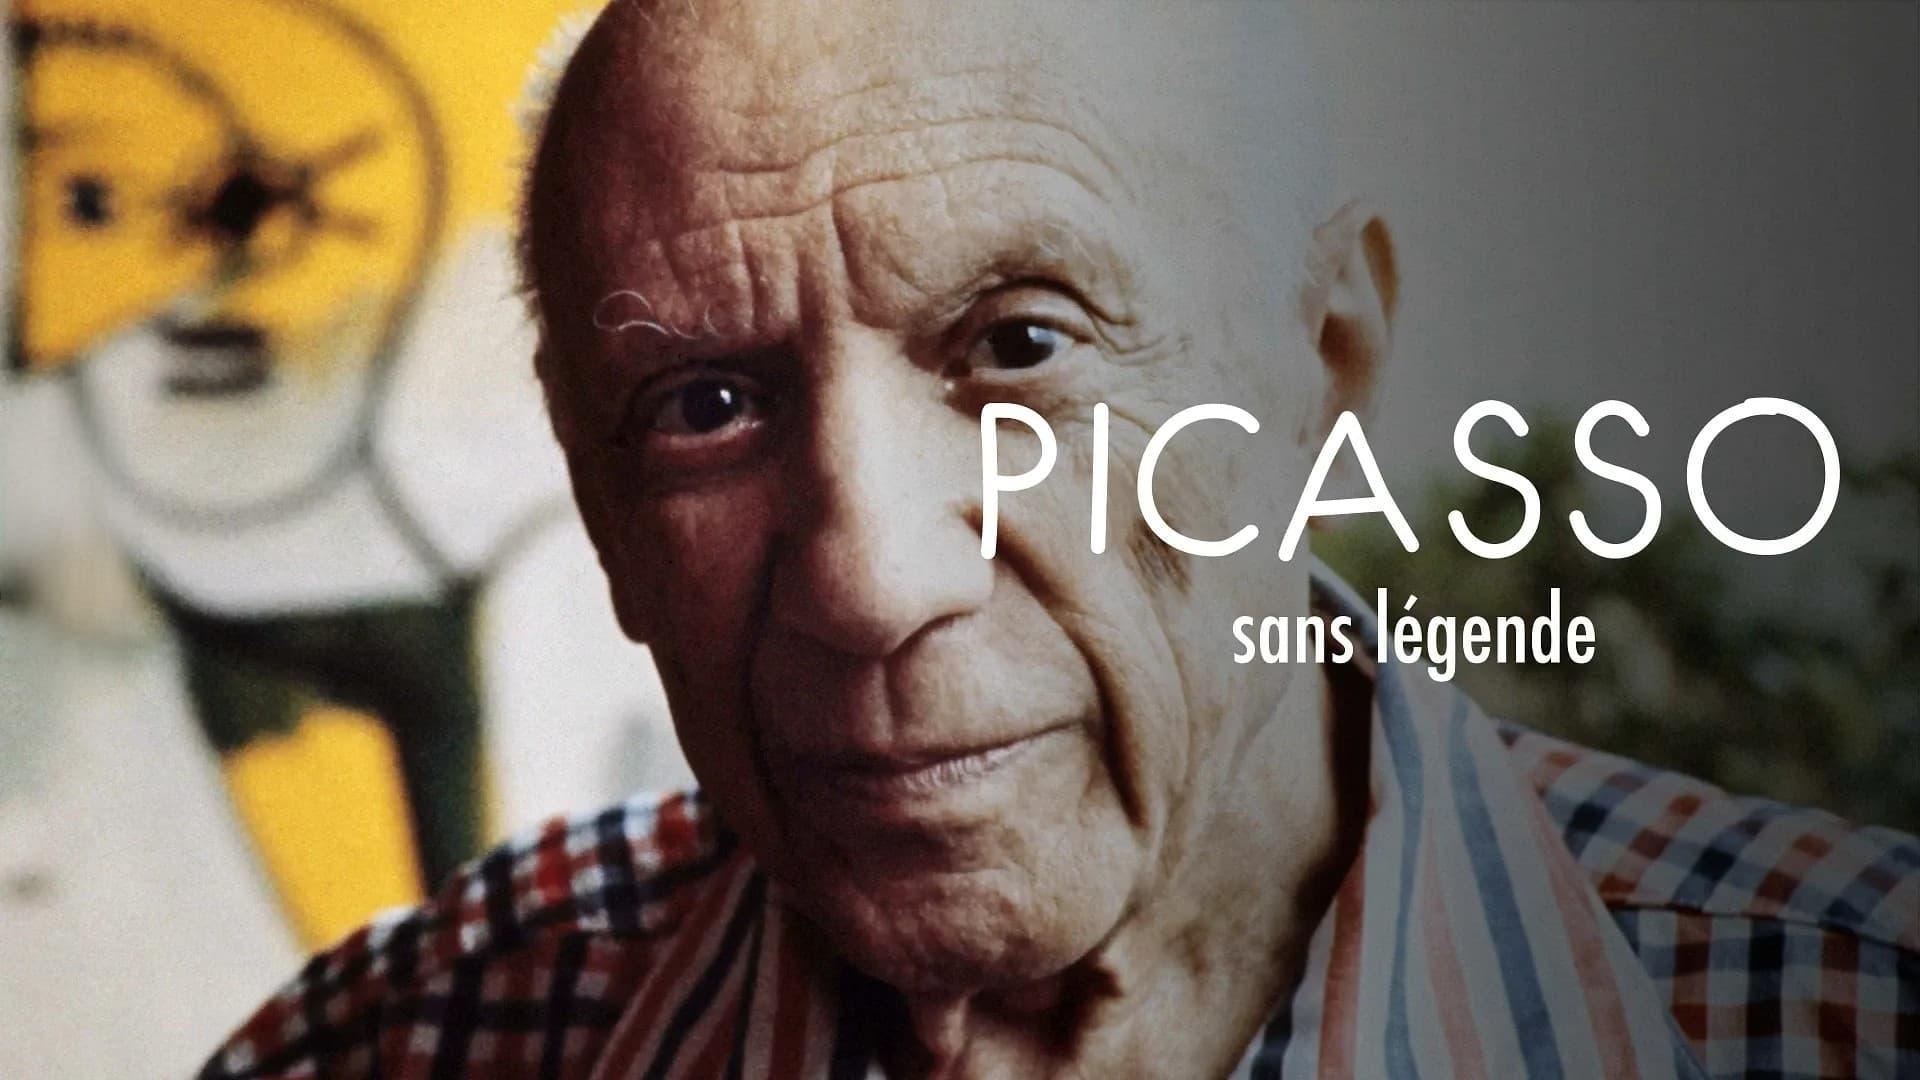 Picasso sans légende backdrop